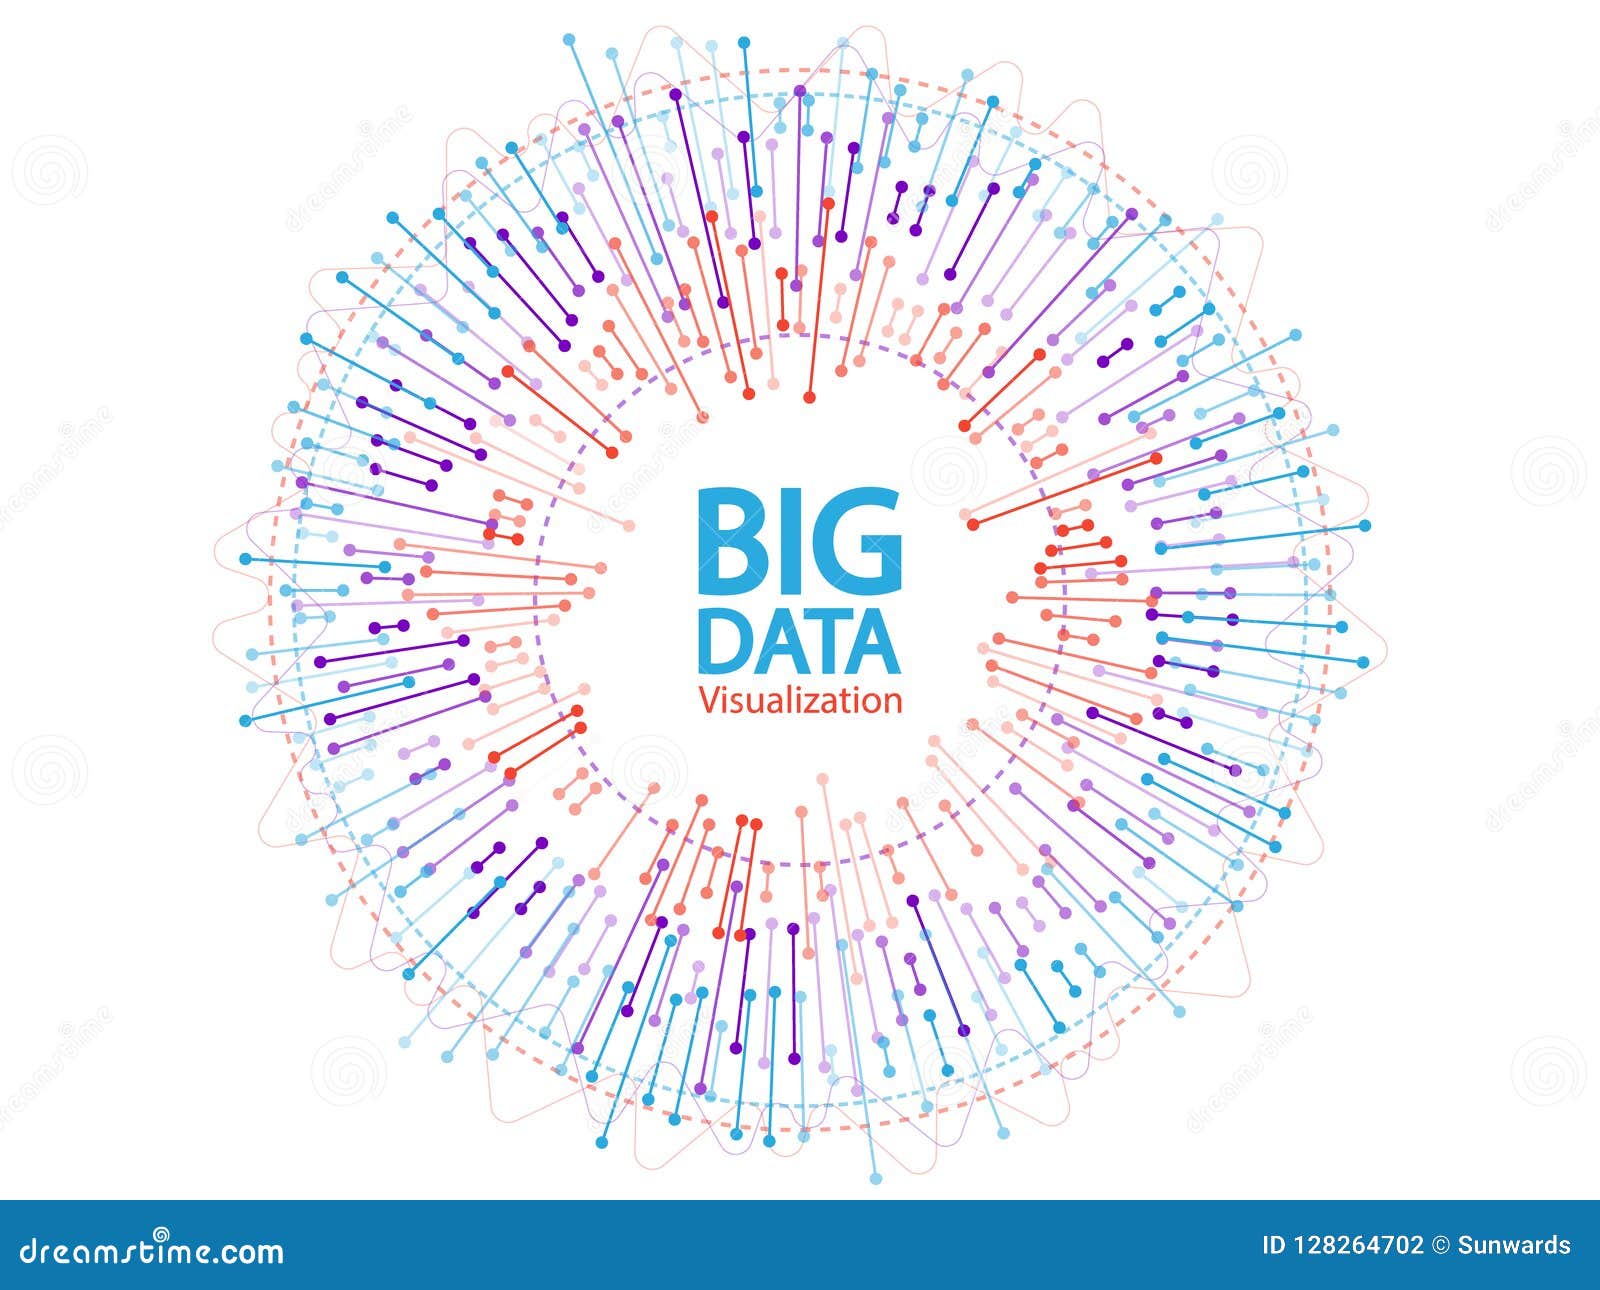 big data visualization concept  .